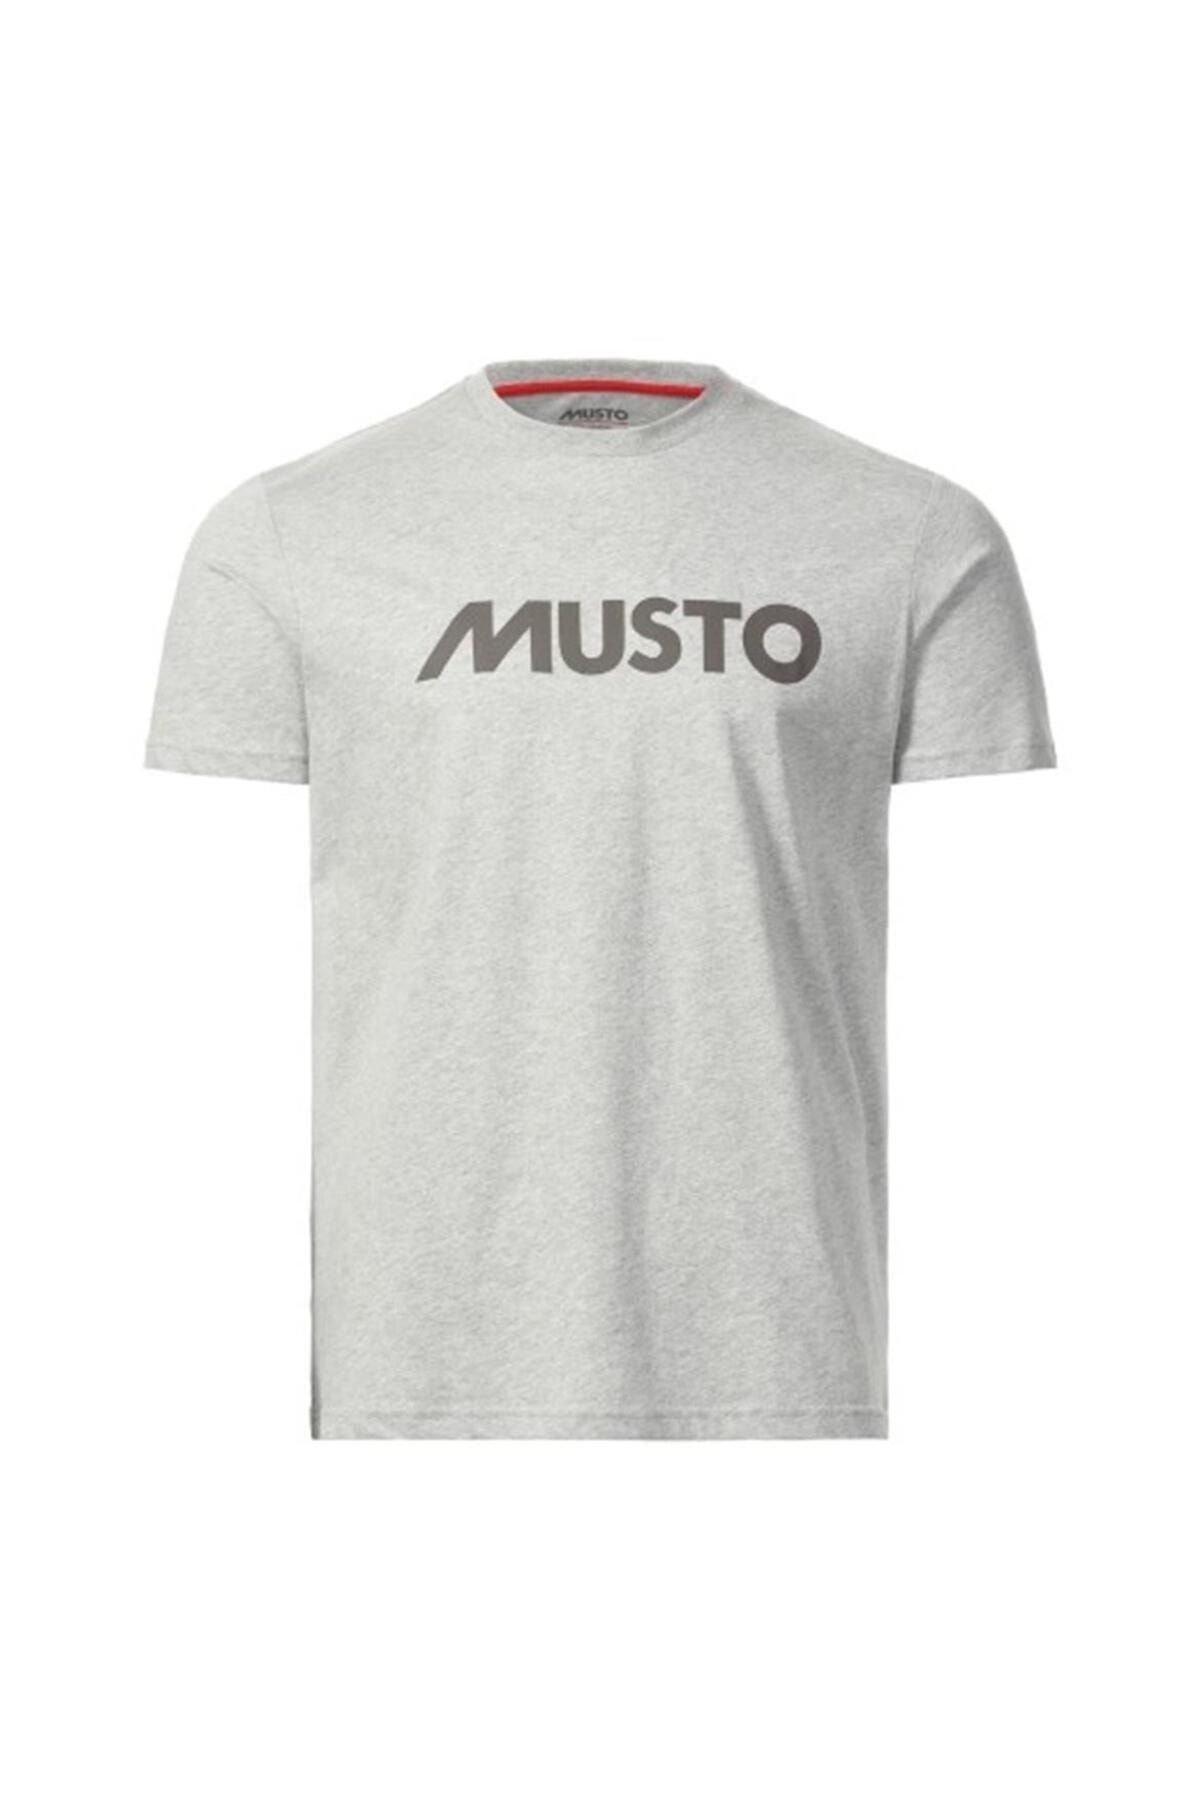 Musto M Logo Erkek T-shırt